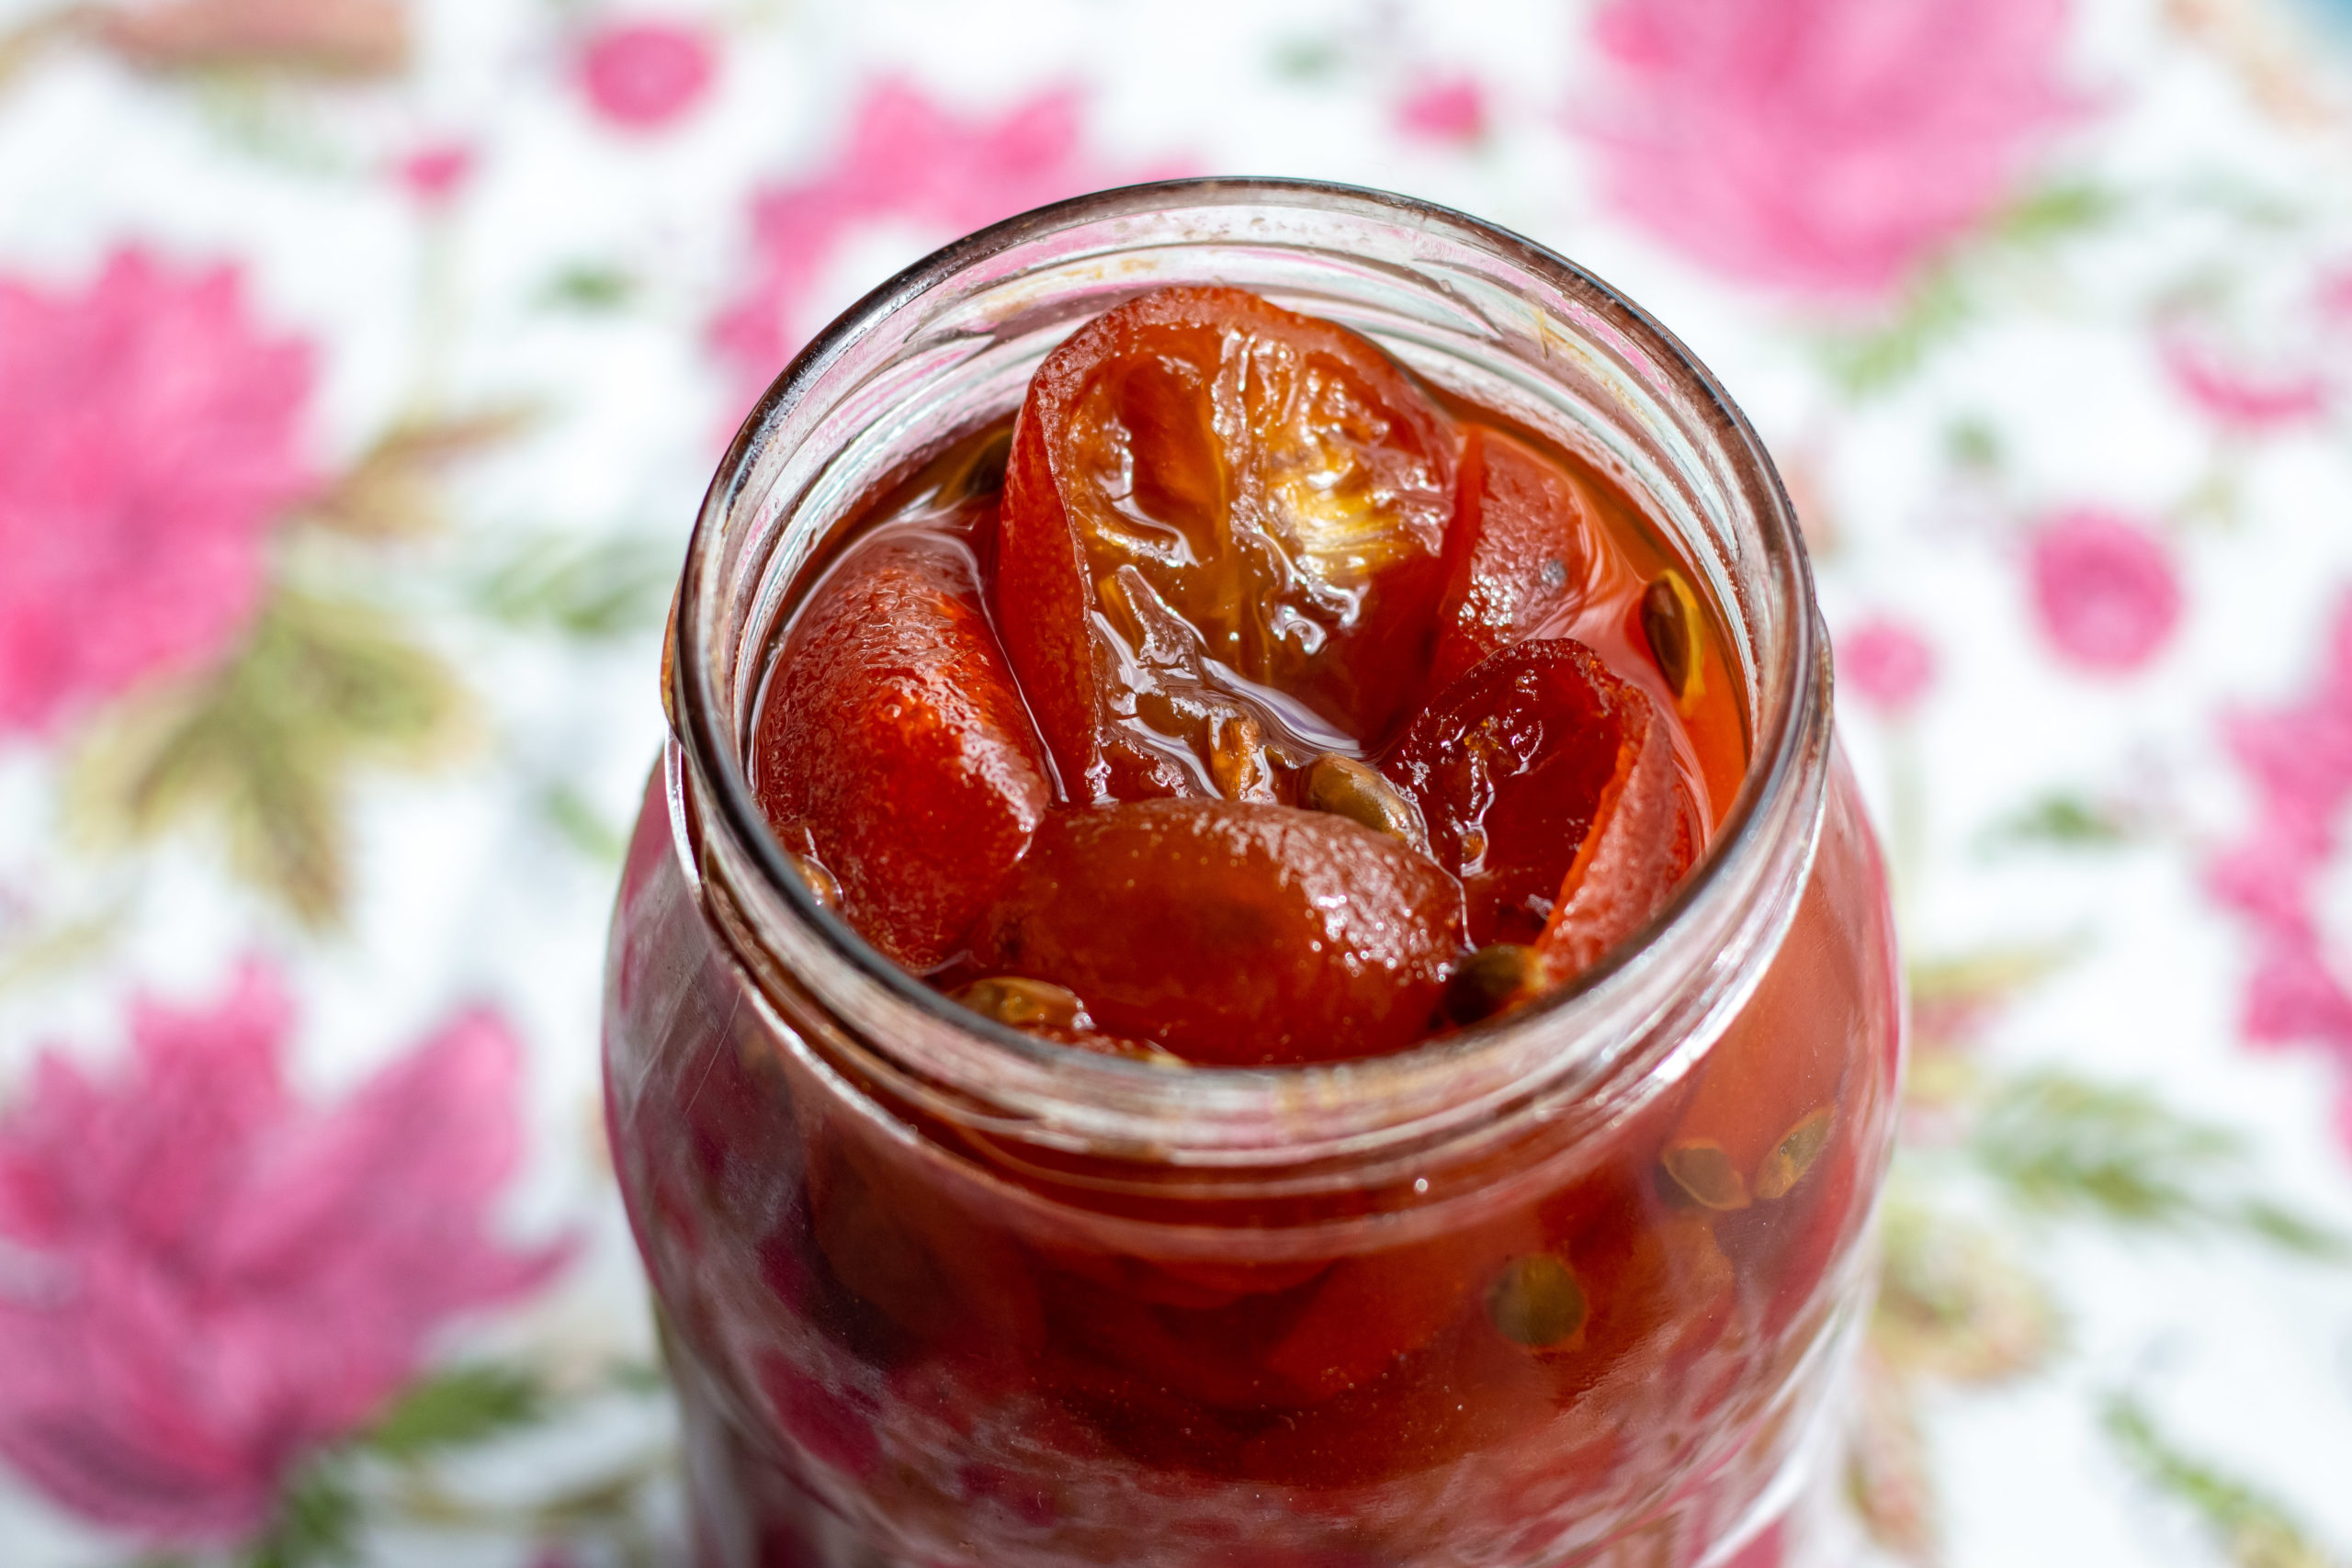 Kumquat jam in a glass canning jar